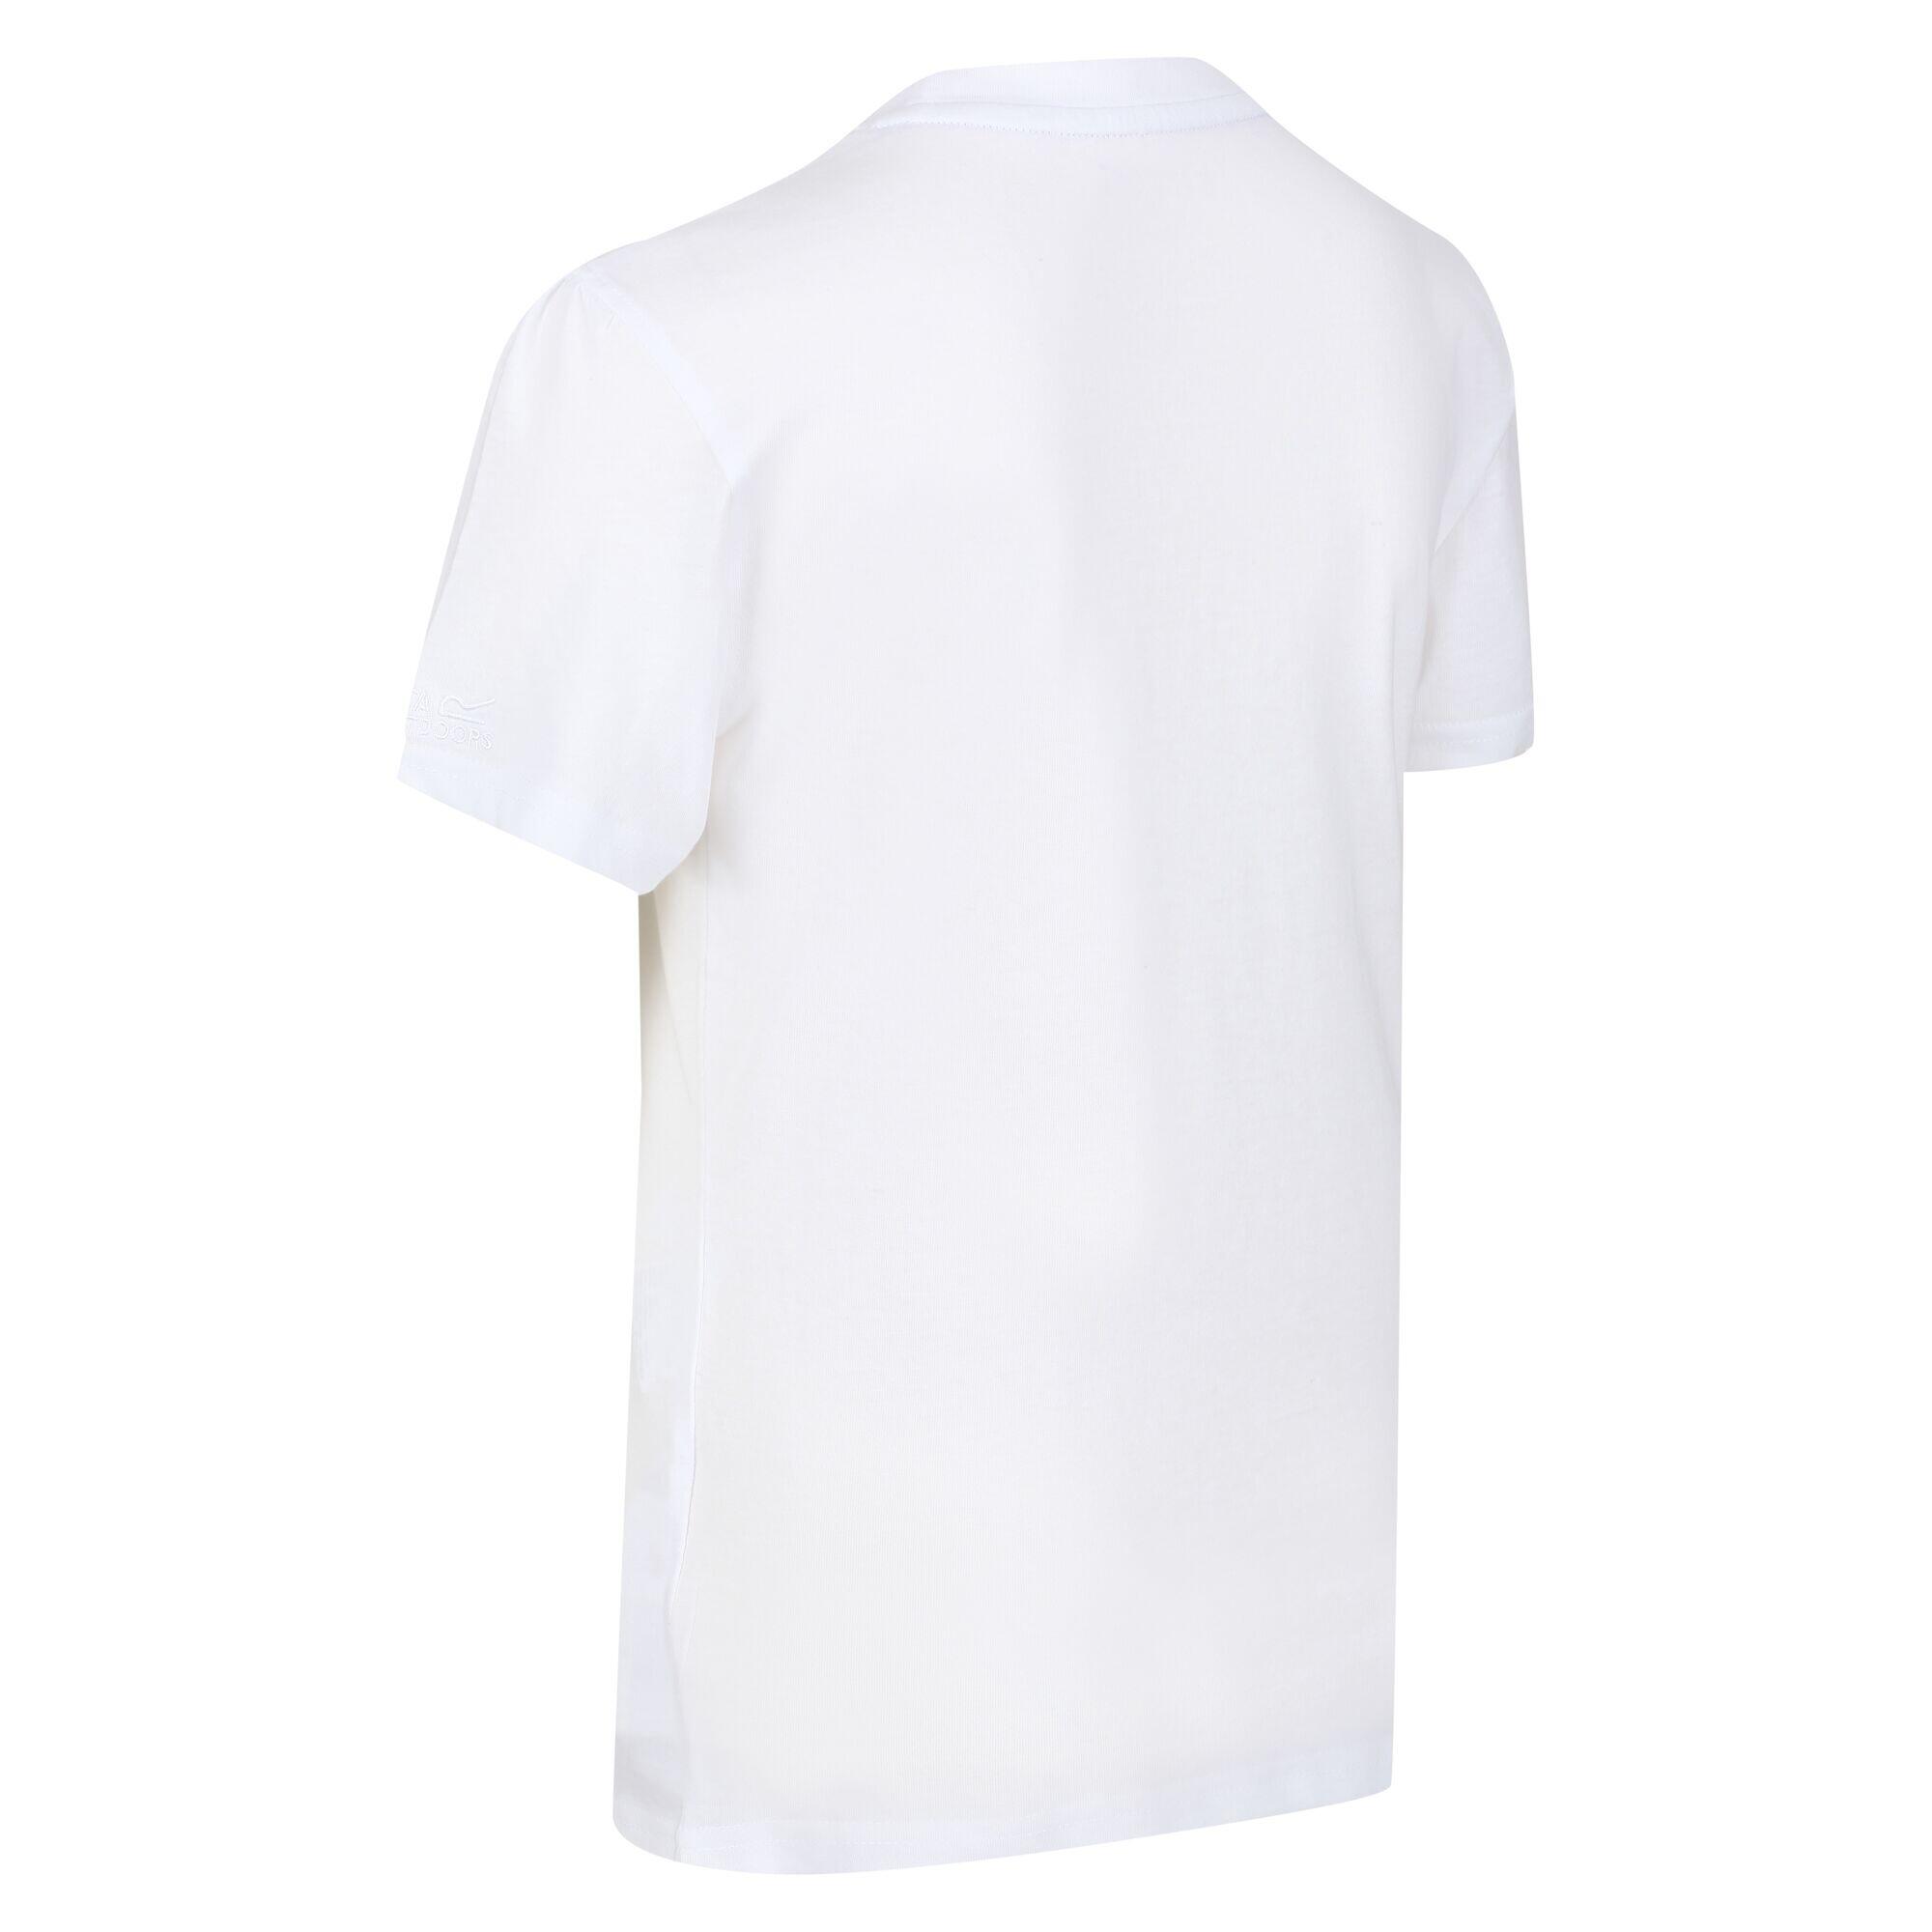 Bosley V Kids Walking Short Sleeve T-Shirt - White Beach 5/5